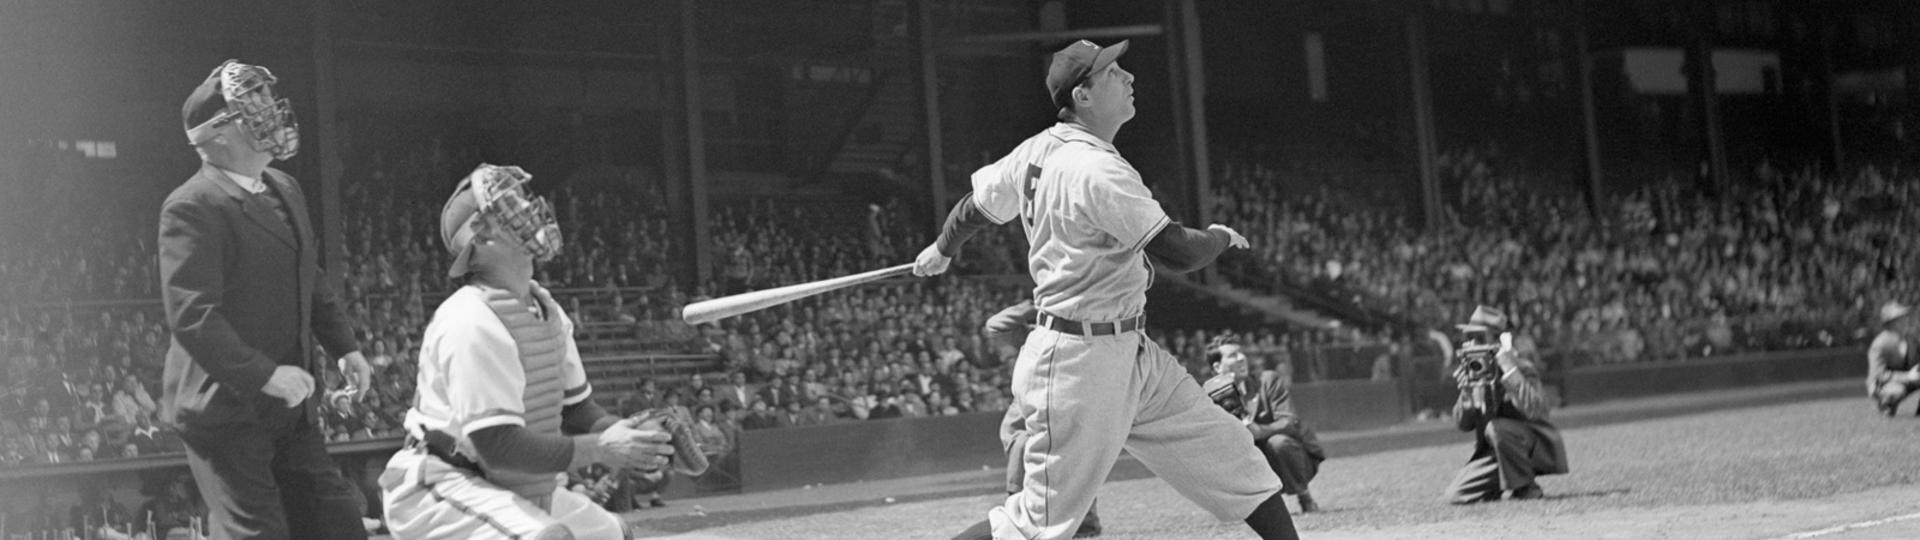 Hank Greenberg hitting a third inning homer against the Philadelphia Phillies, April 29, 1947.